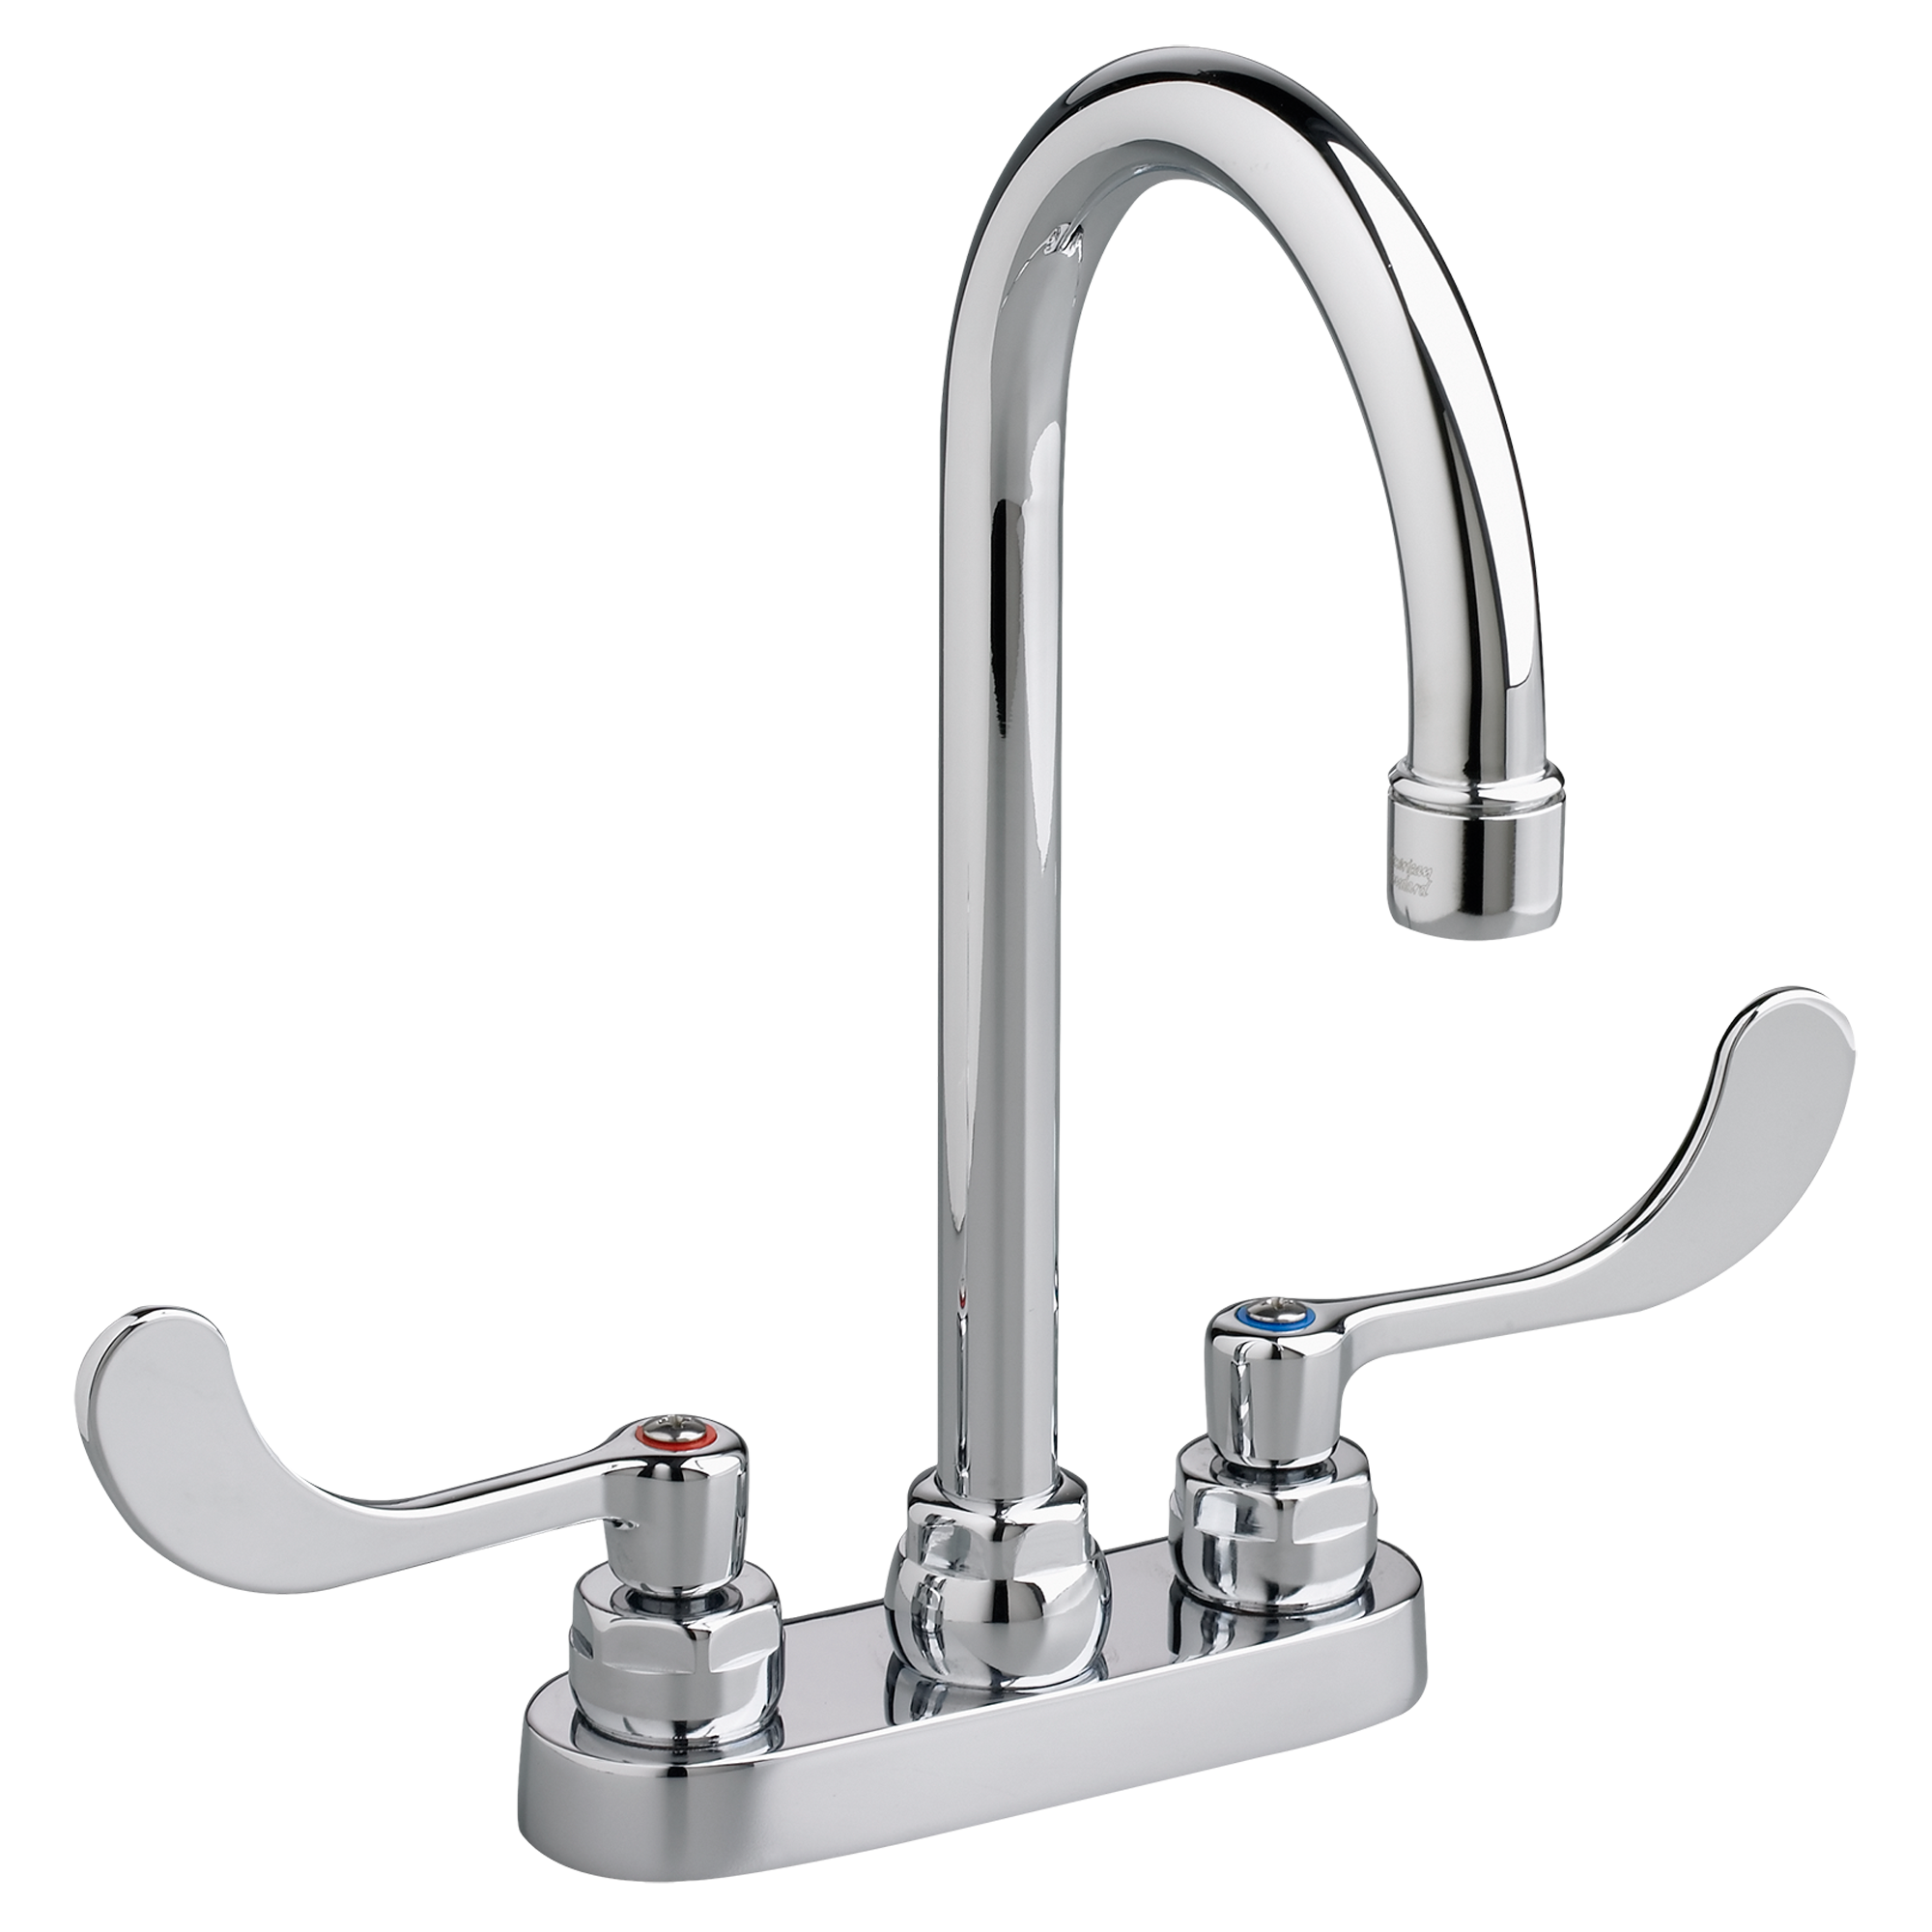 Faucet clipart shower faucet. Commercial faucets bathroom american